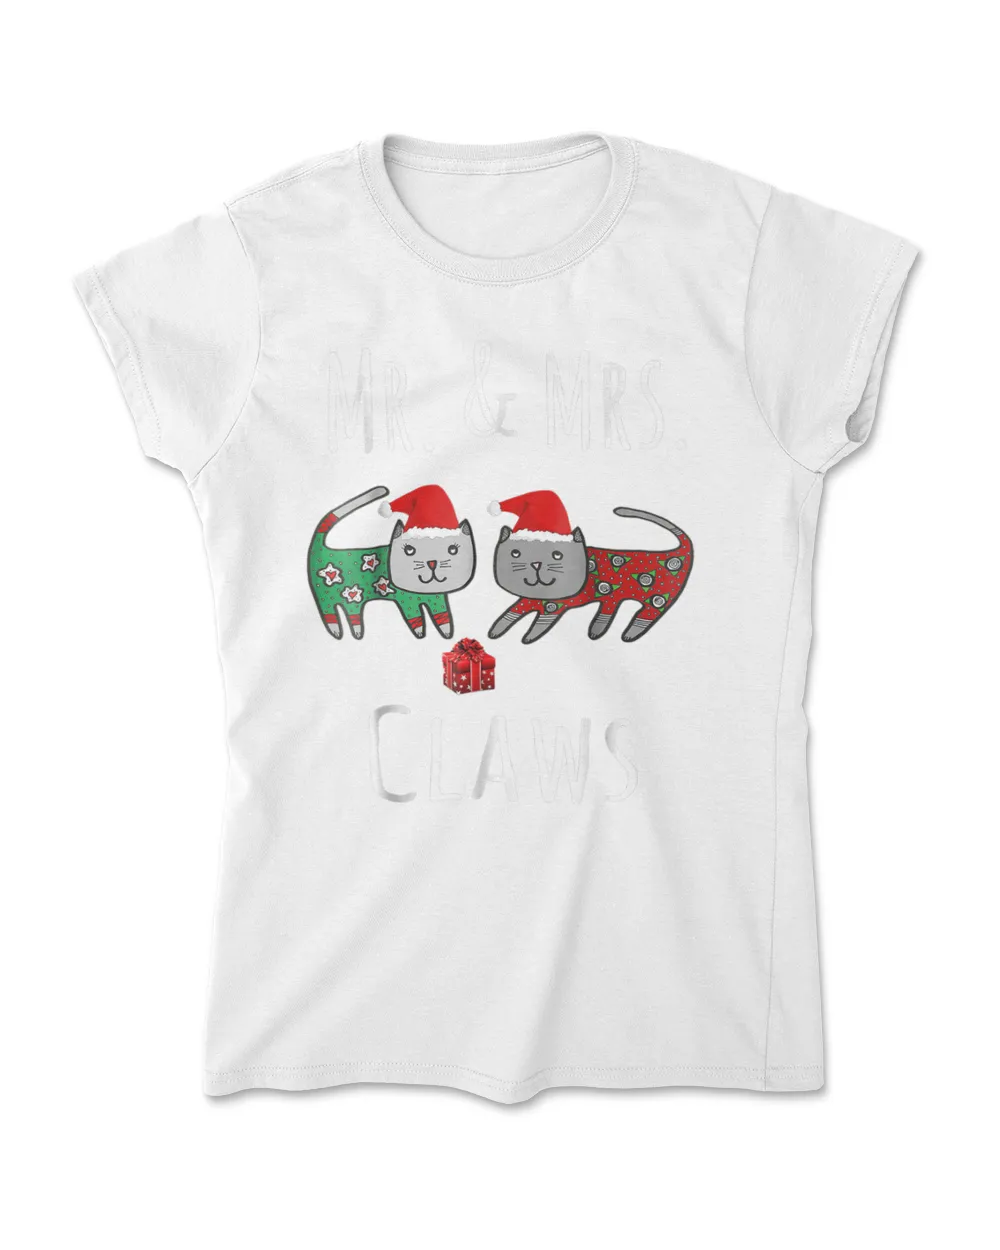 Cat Lover Christmas T-Shirt - Santa Mr  Mrs Claws Cat Shirt